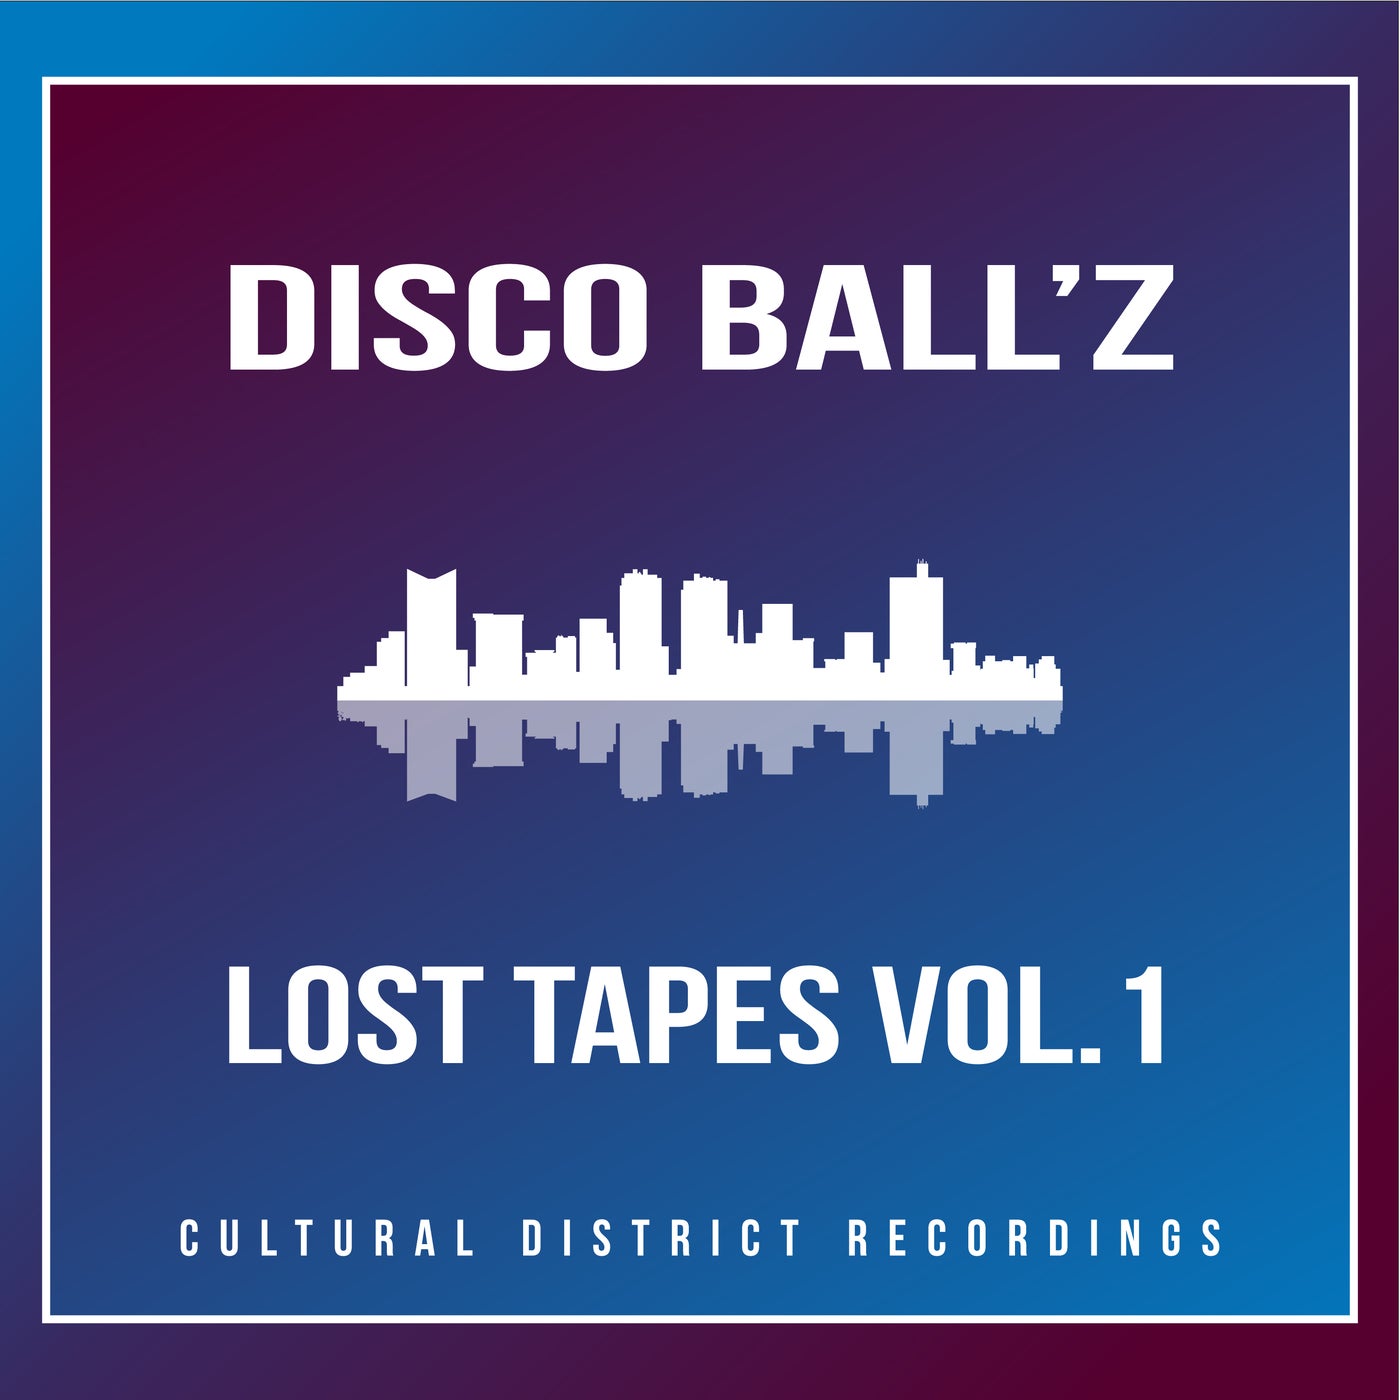 Disco Ball'z - Lost Tapes, Vol. 1 [Cultural District Recordings]